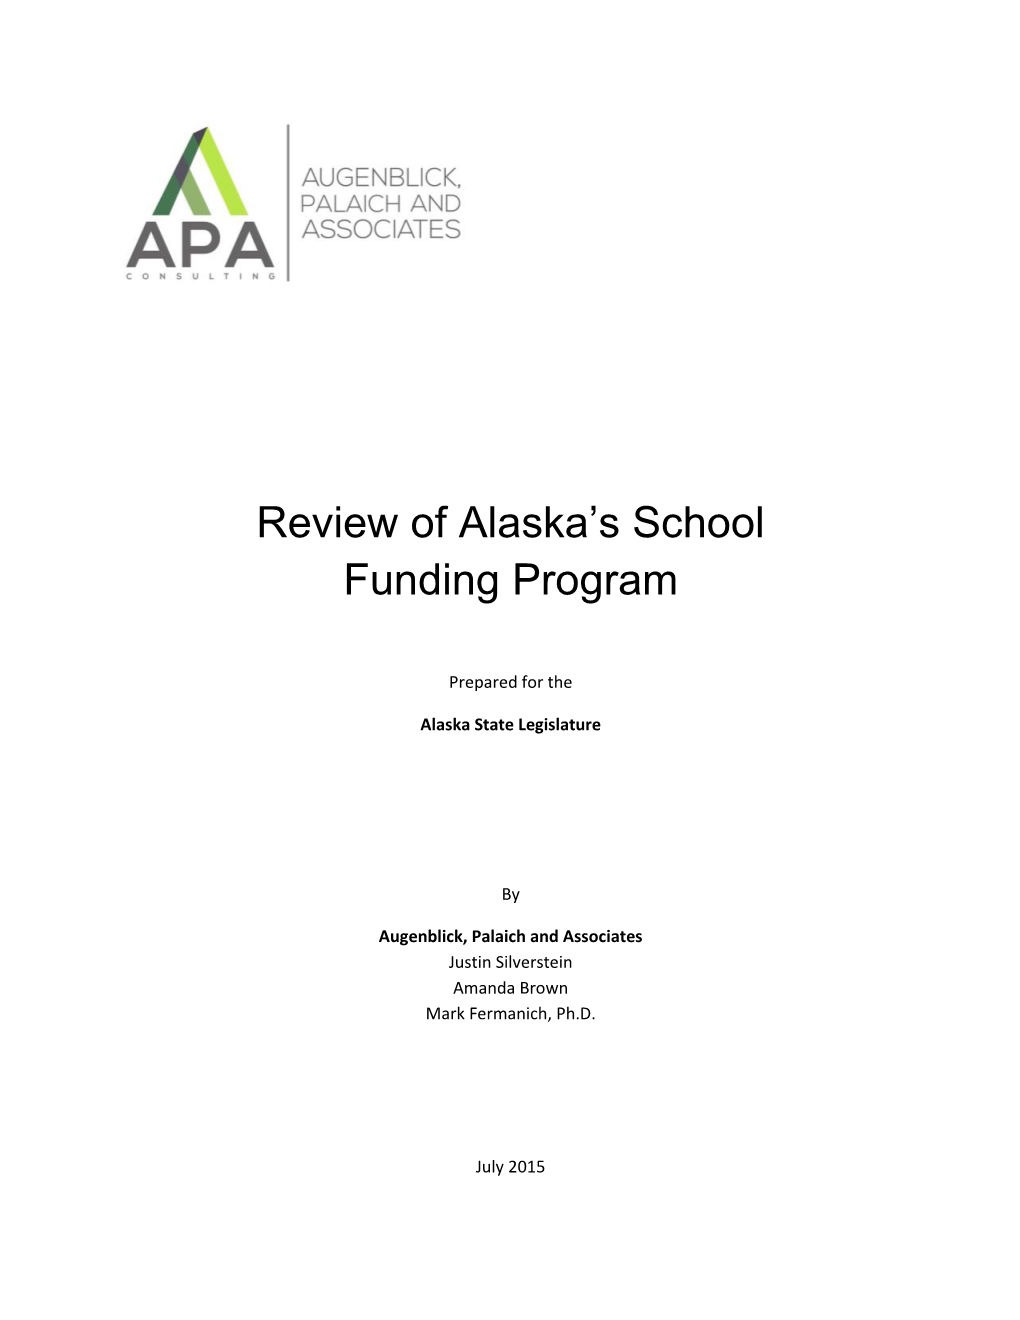 Review of Alaska's School Funding Program